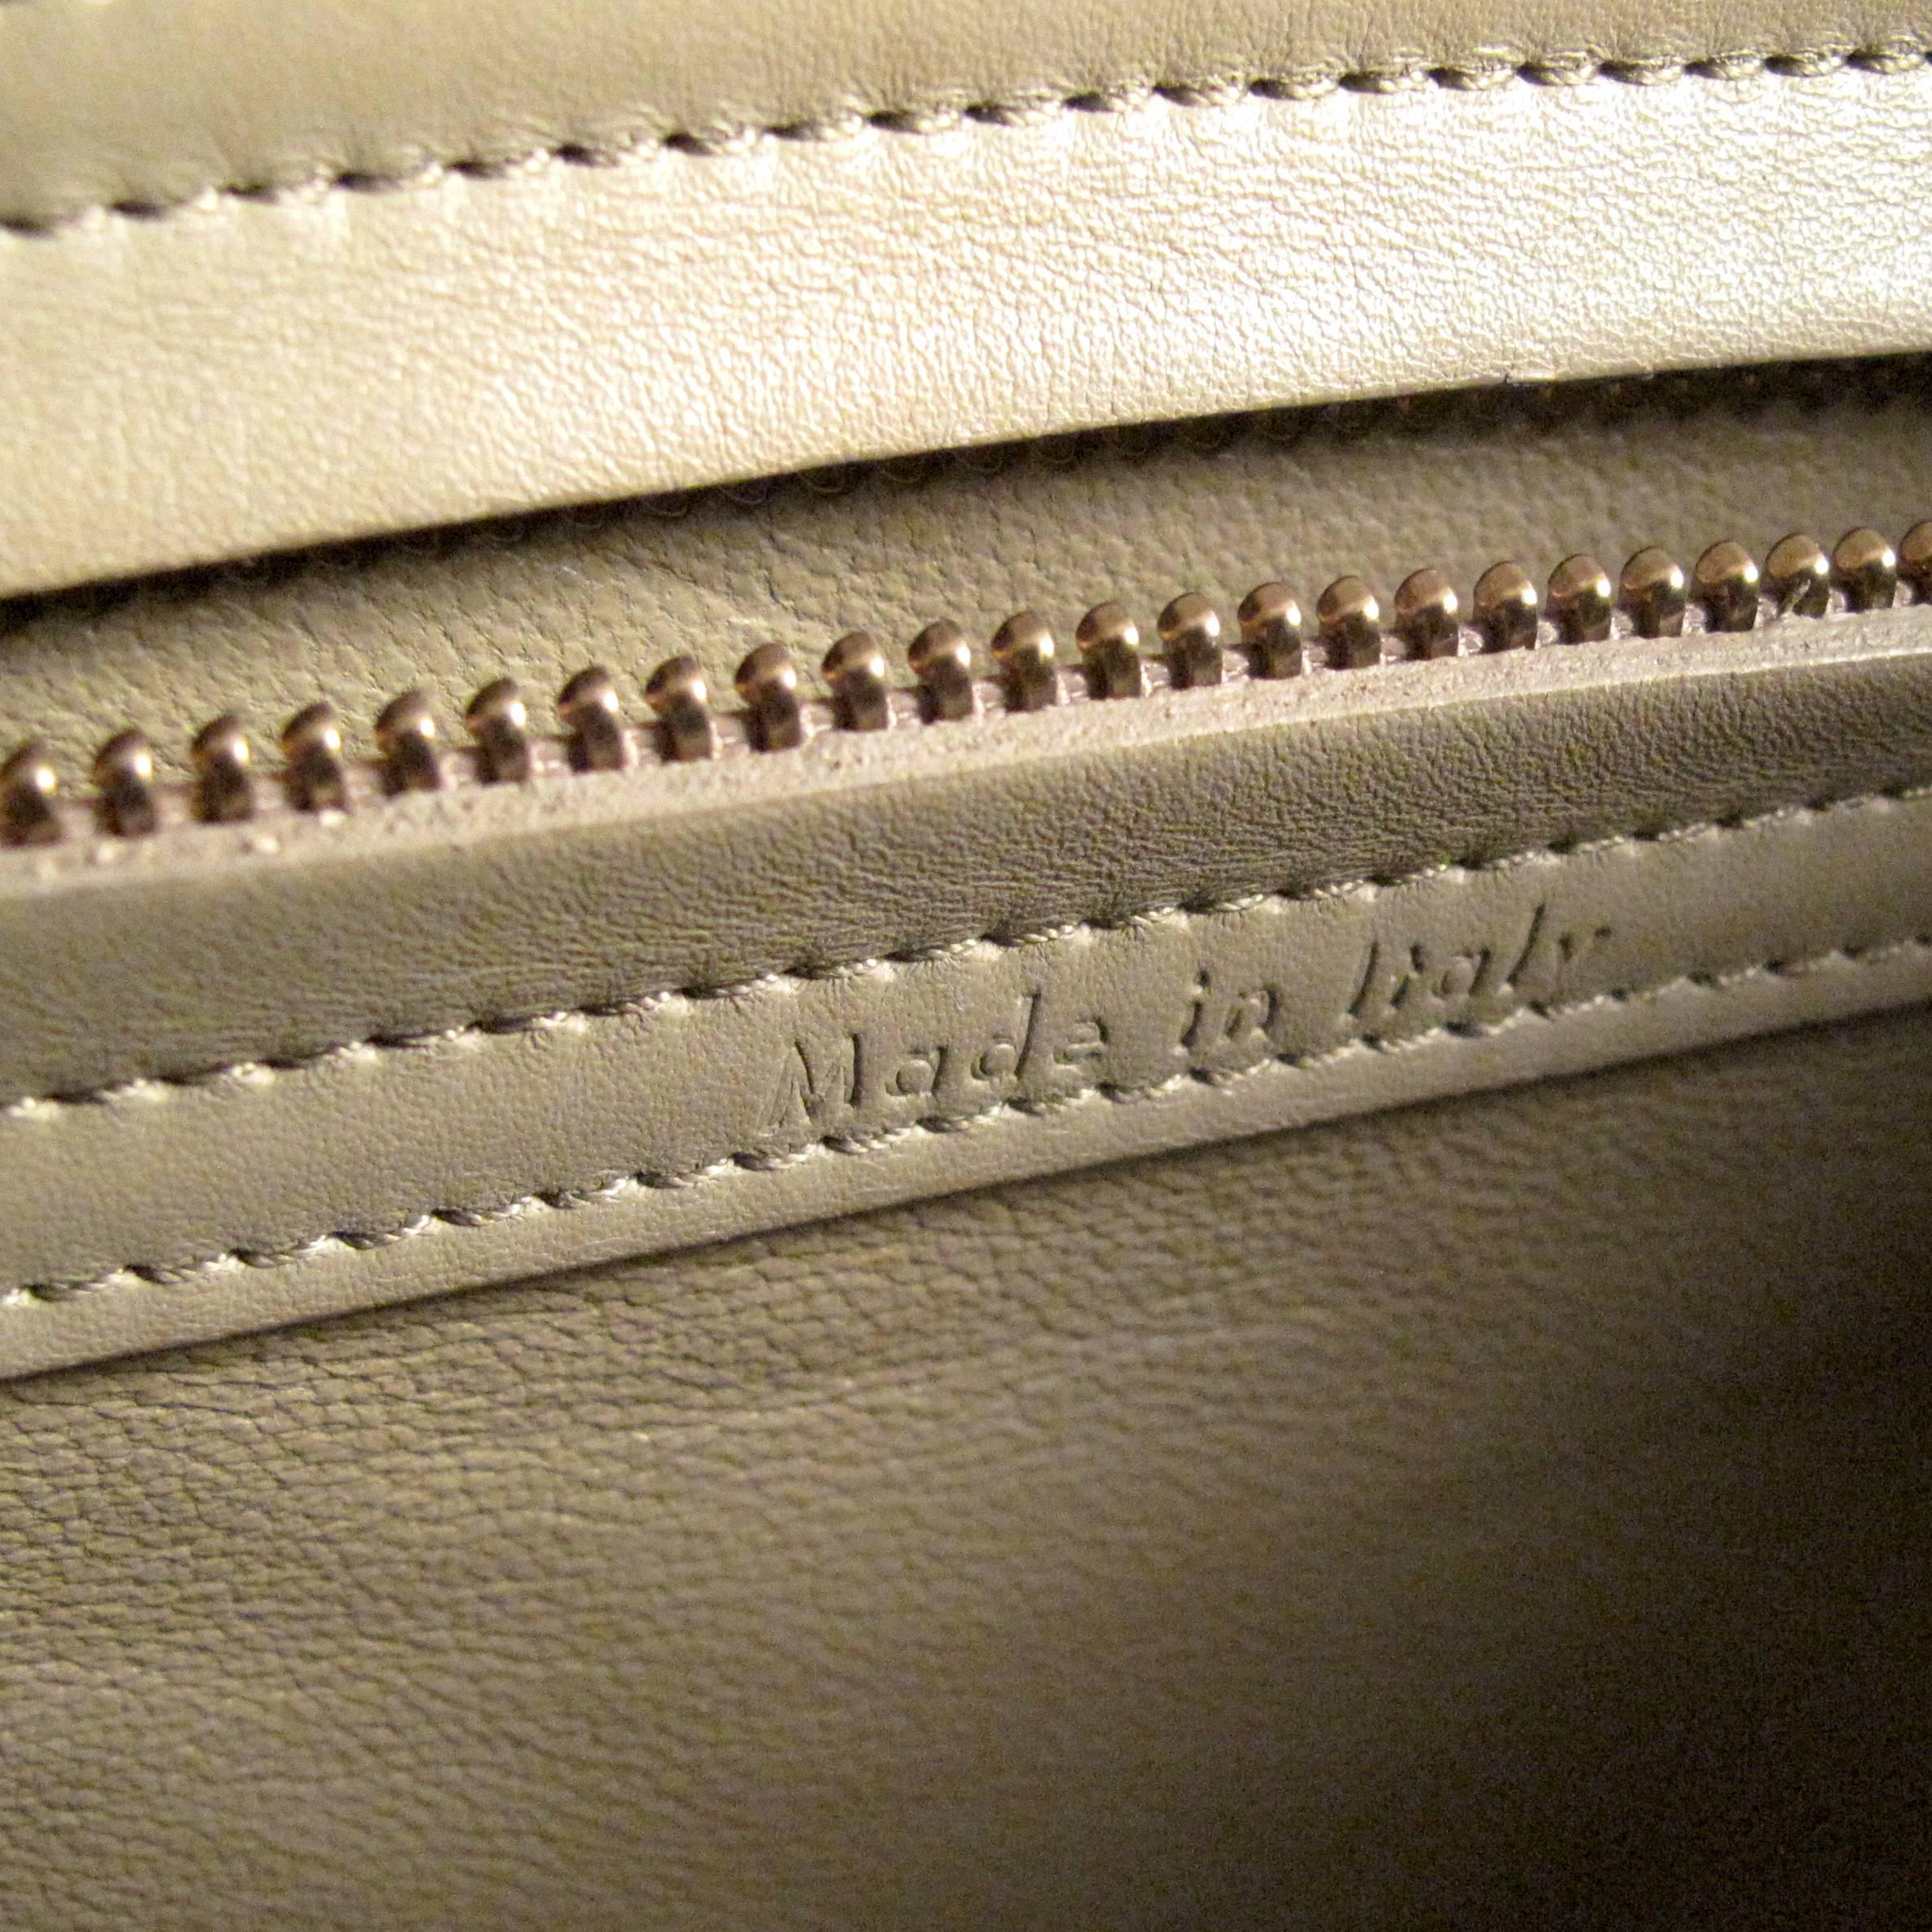 Celine Phantom Bag - Tan Suede Leather Embossed Crocodile Luggage Tote Handbag 1